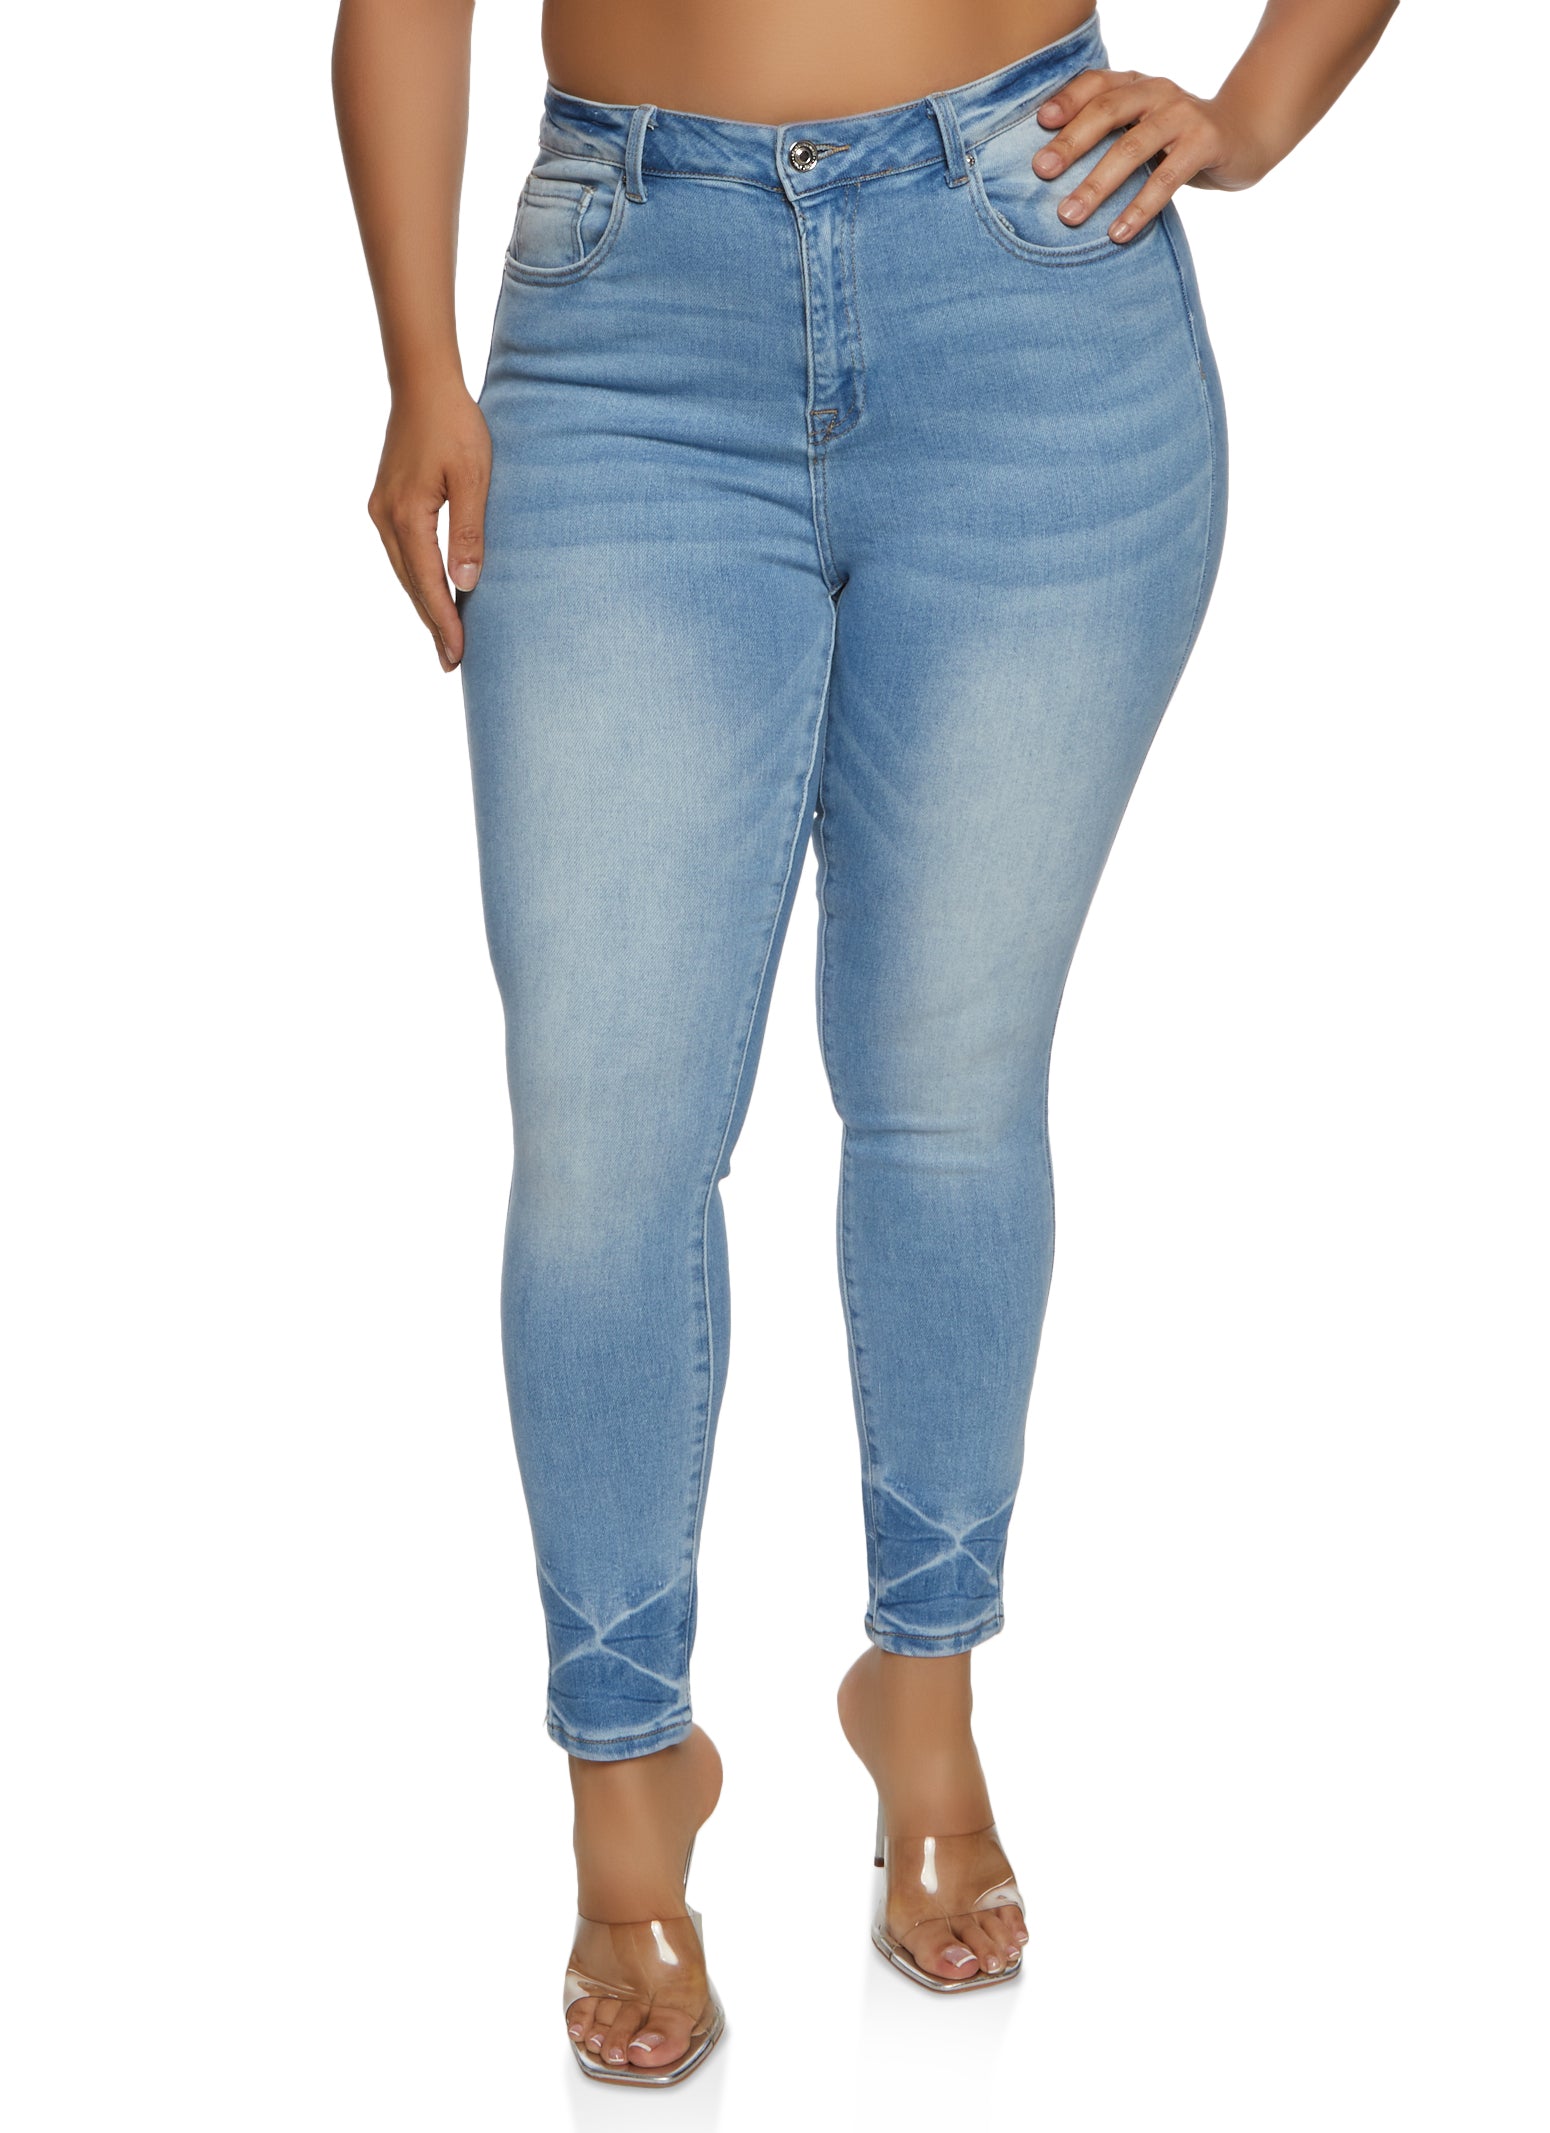 Women's Fake Denim Capris Lace Hem Floral Cropped Jeans Skinny Capri  Leggings Plus Size Stretch Tights Short Pants at  Women's Clothing  store